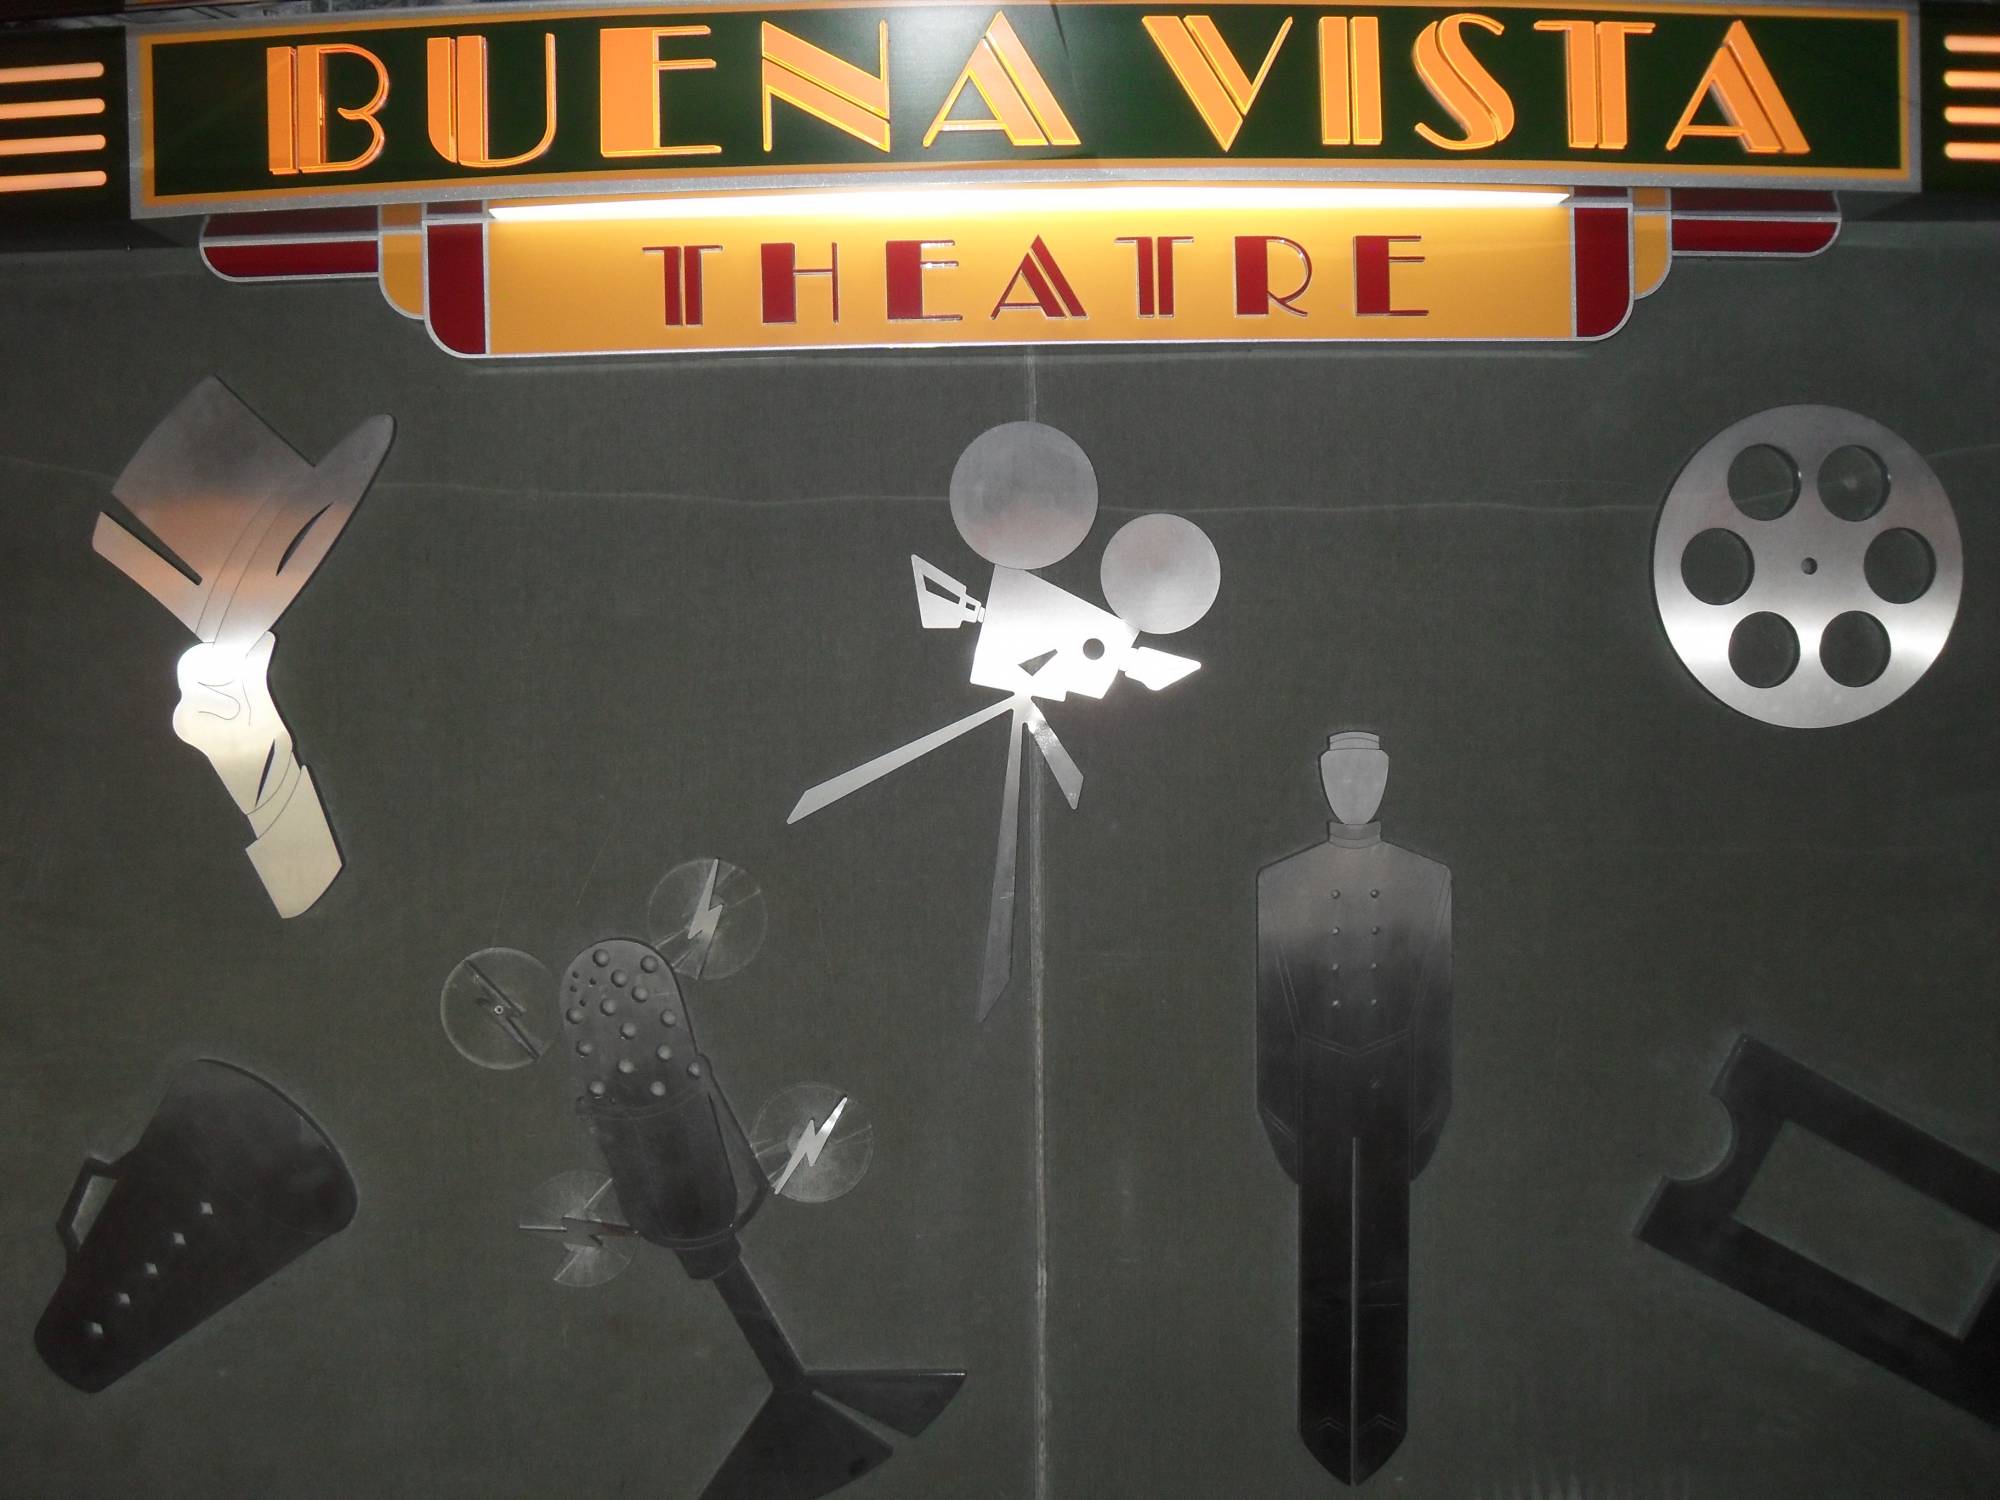 Buena Vista Theater